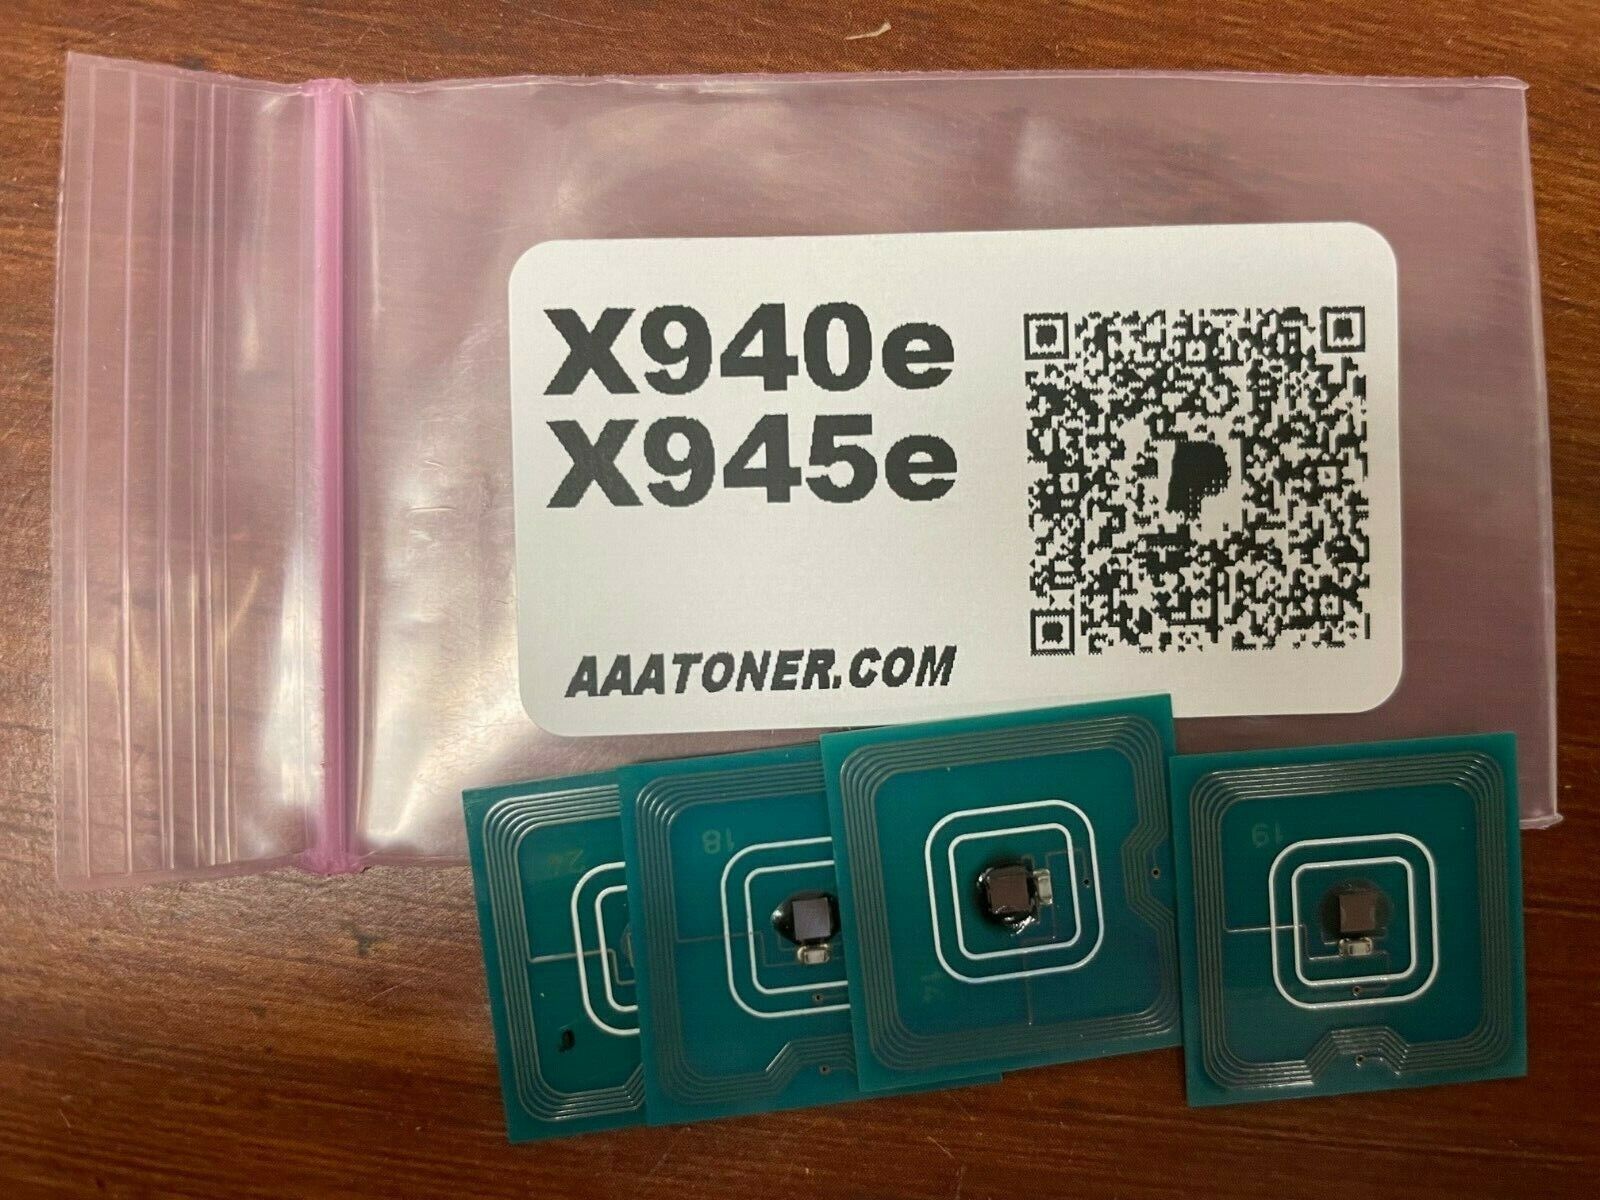 4 x Toner Reset Chip for Lexmark X940, X945, X940e, X945e Refill